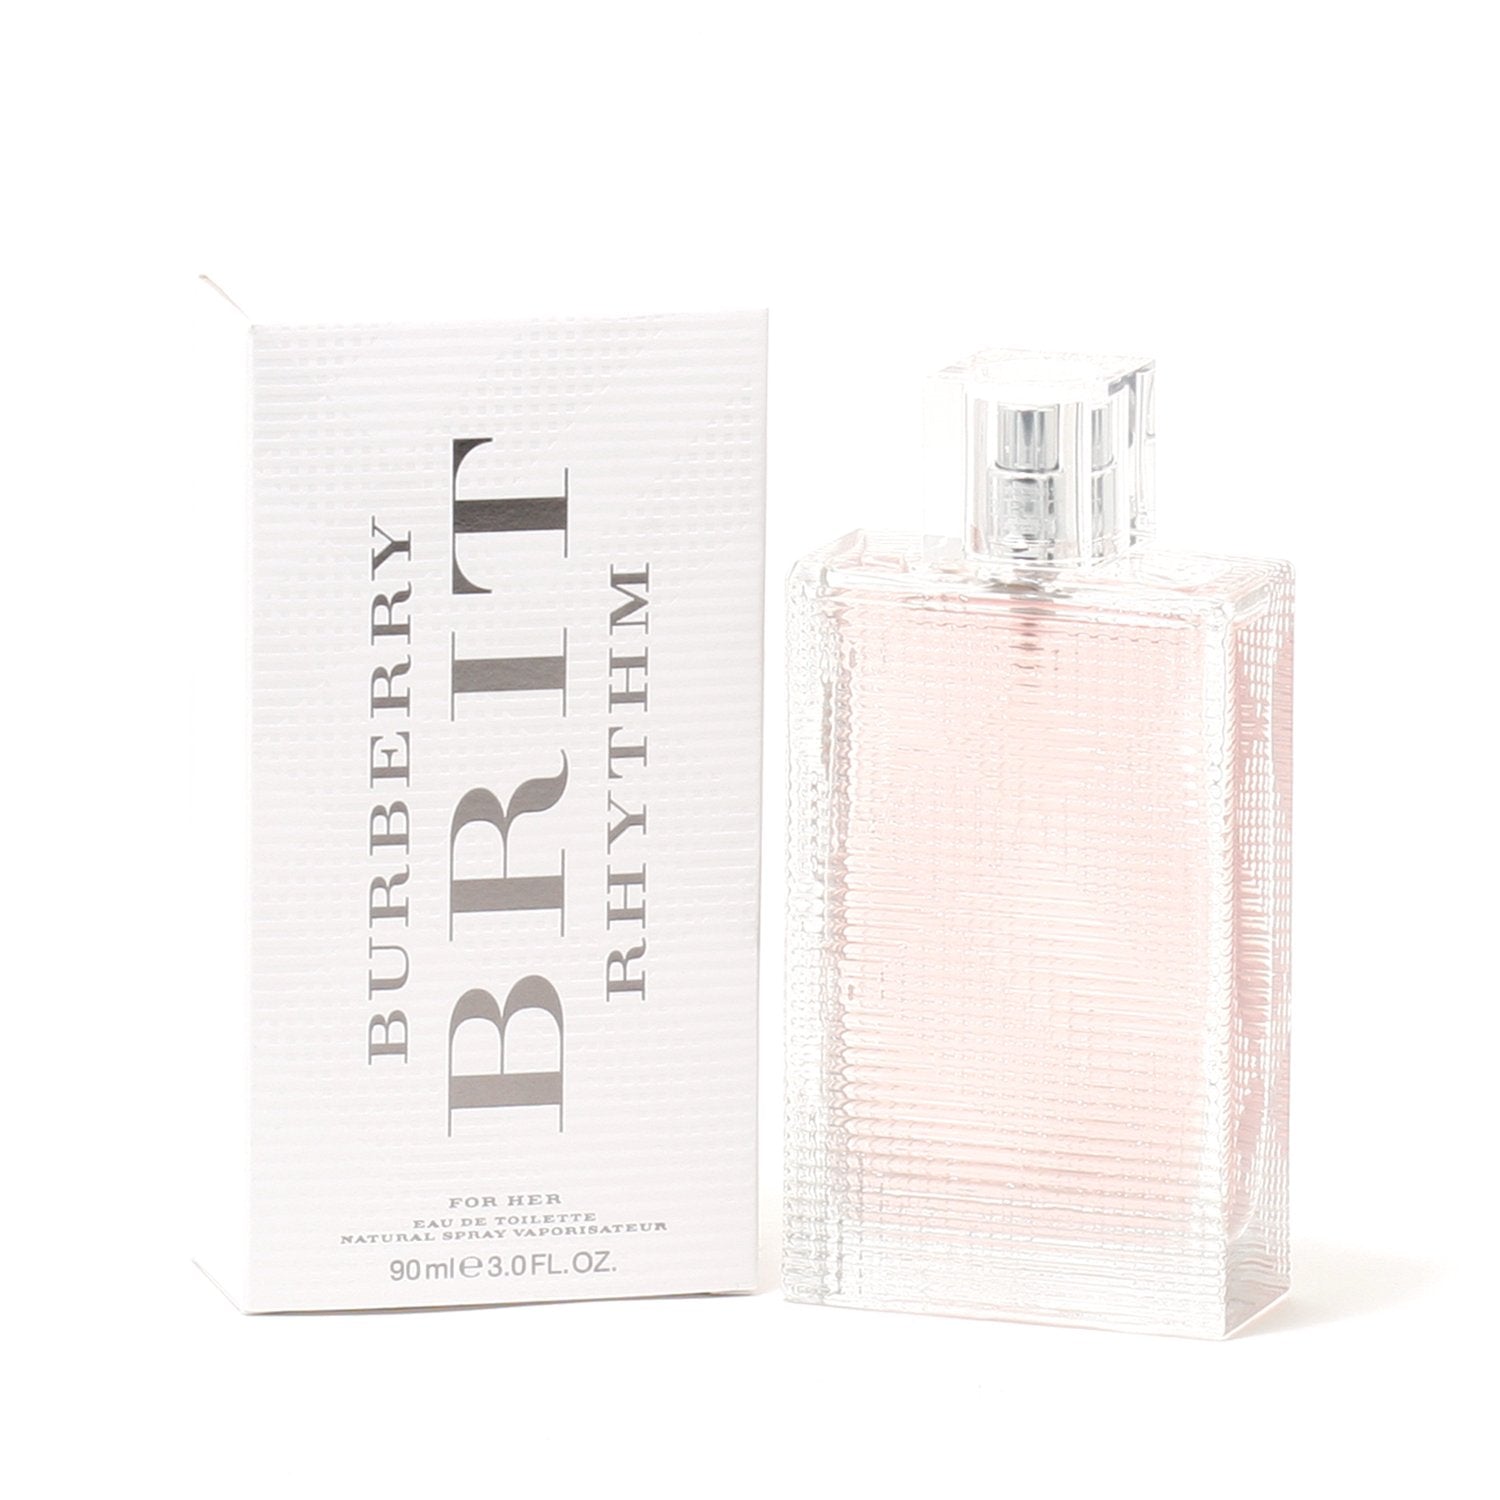 Perfume - BURBERRY BRIT RHYTHM FOR WOMEN - EAU DE TOILETTE SPRAY